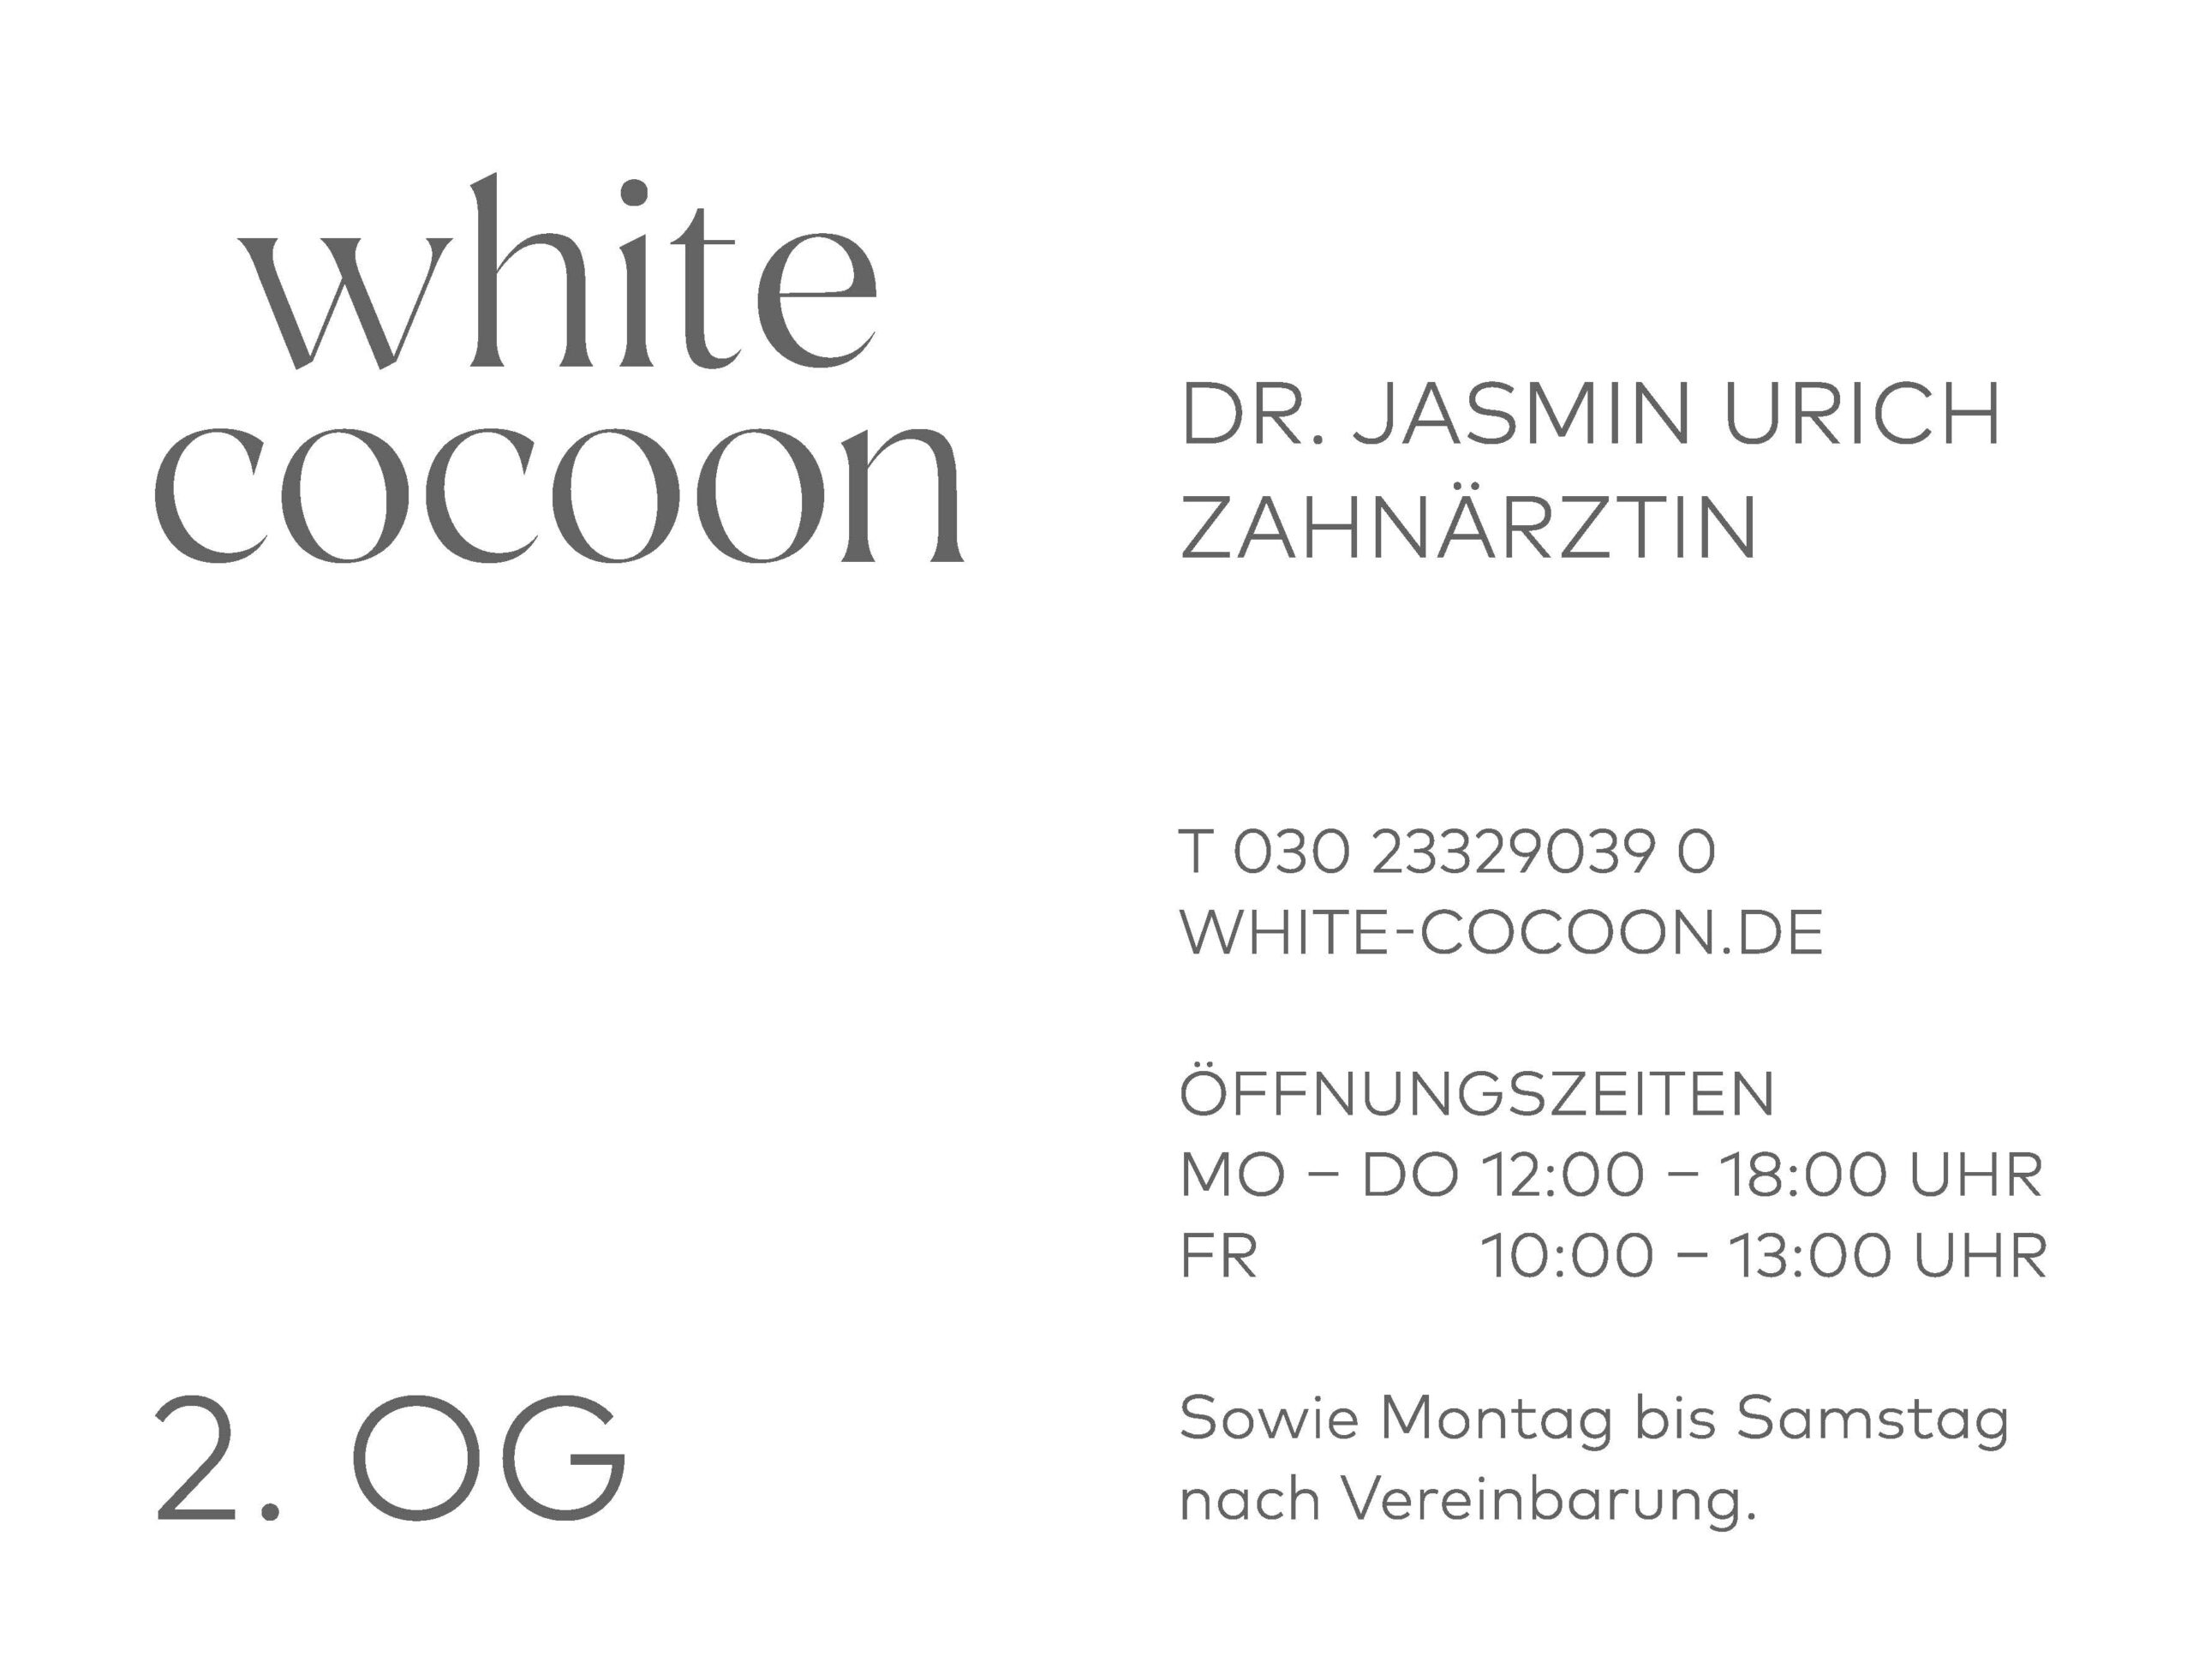 Dr. Jasmin Urich